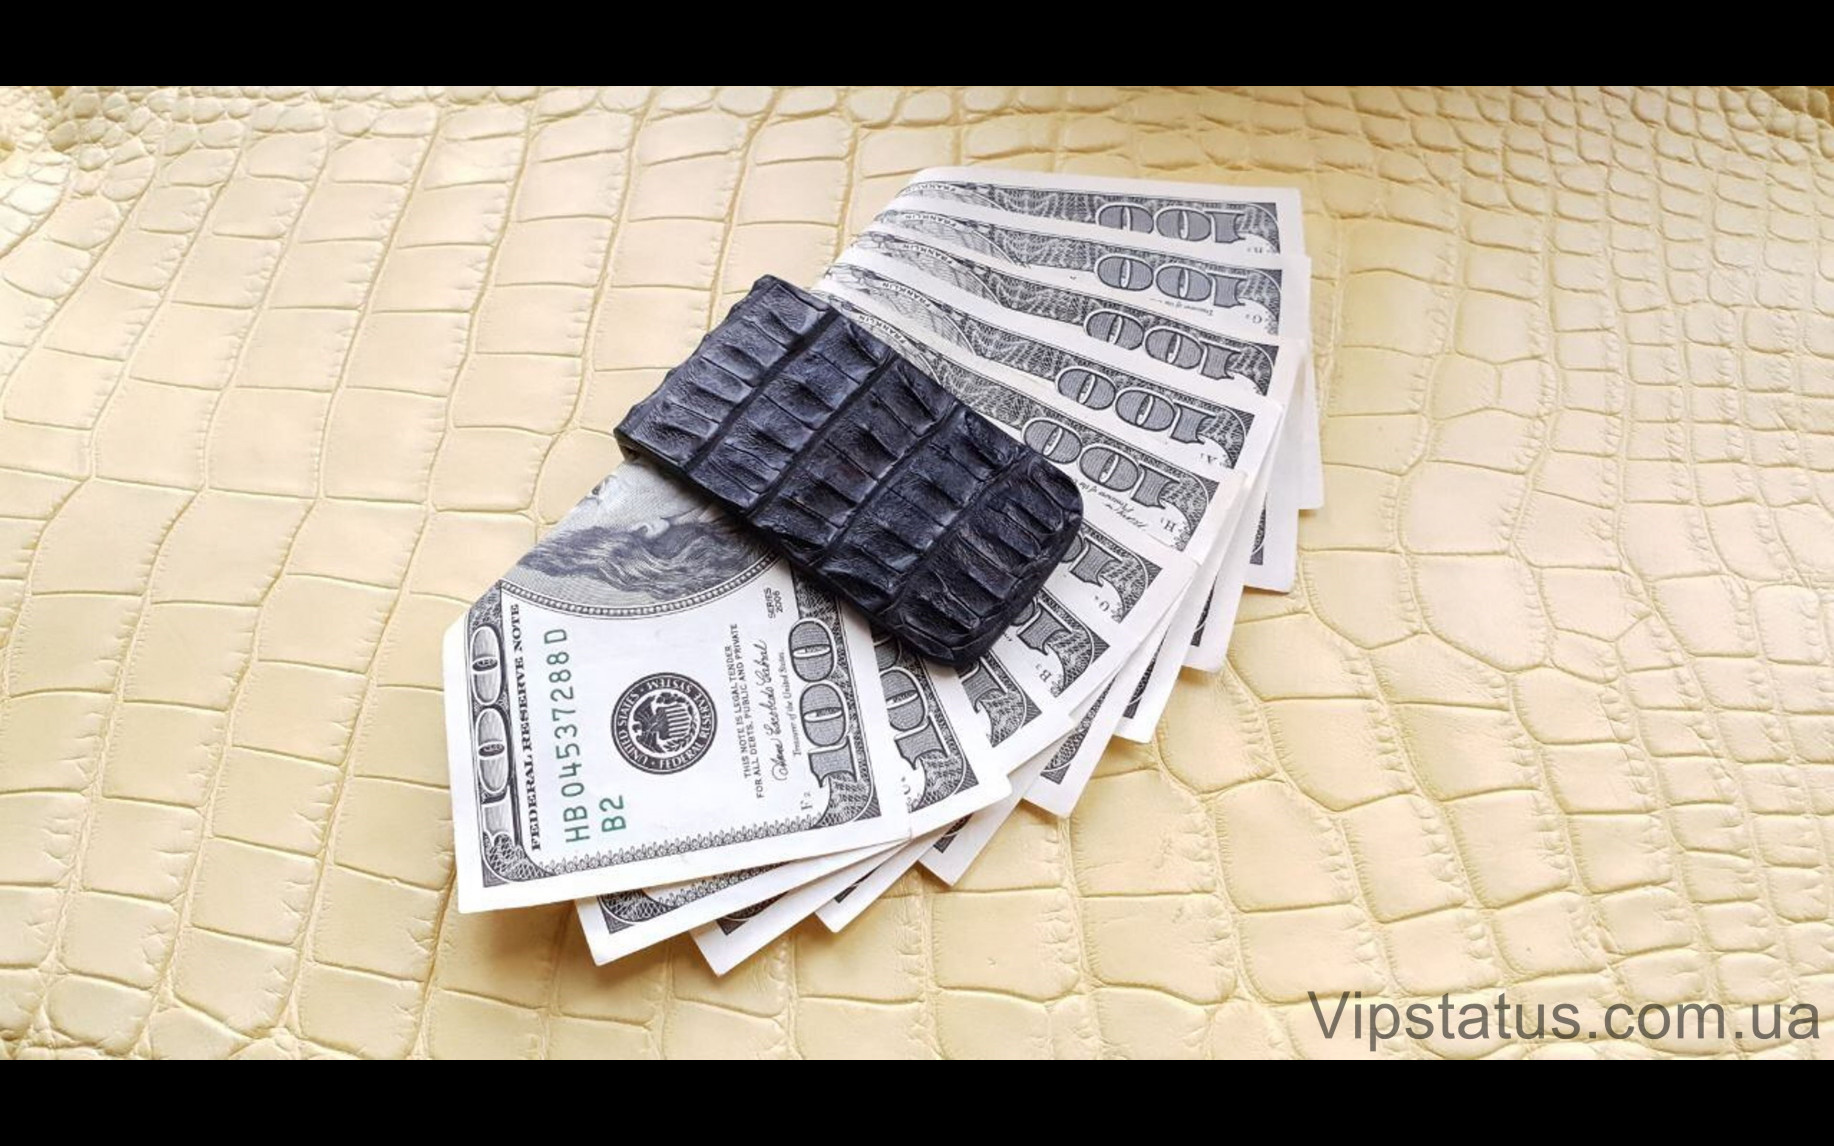 Elite Black King Премиум зажим для купюр Black King Premium bill clip image 1